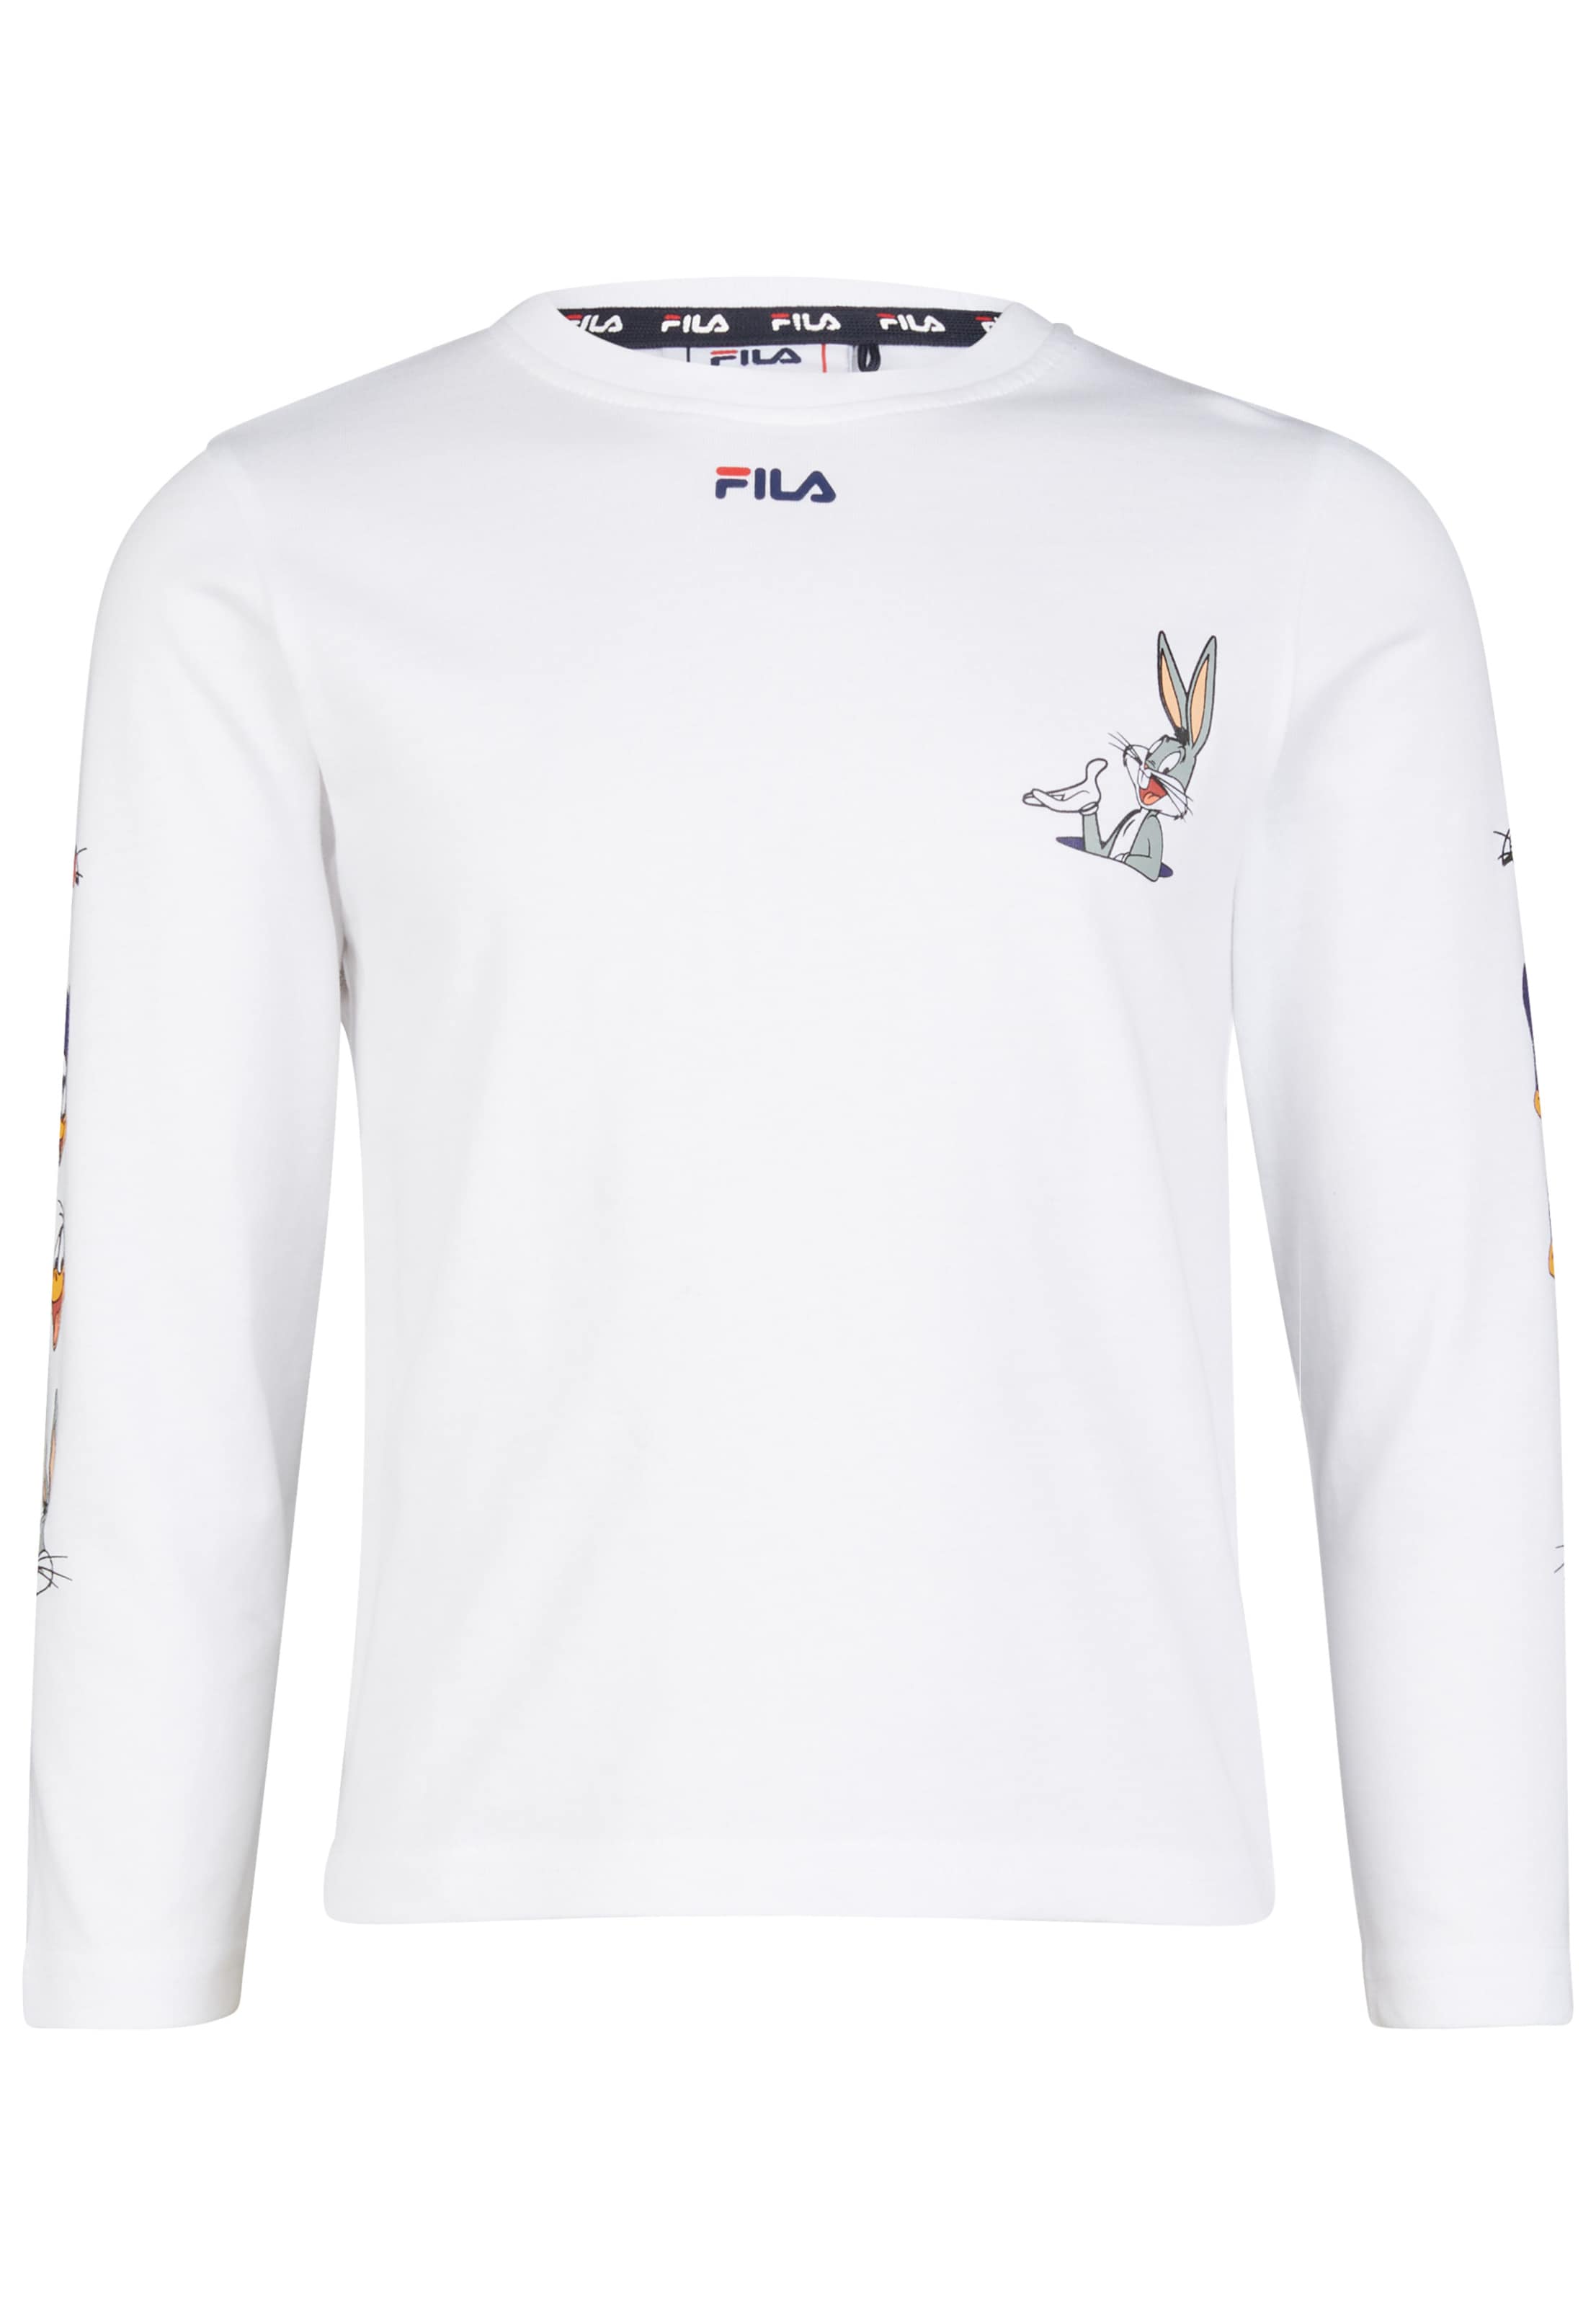 Fila T-Shirt 86-92 Blanc